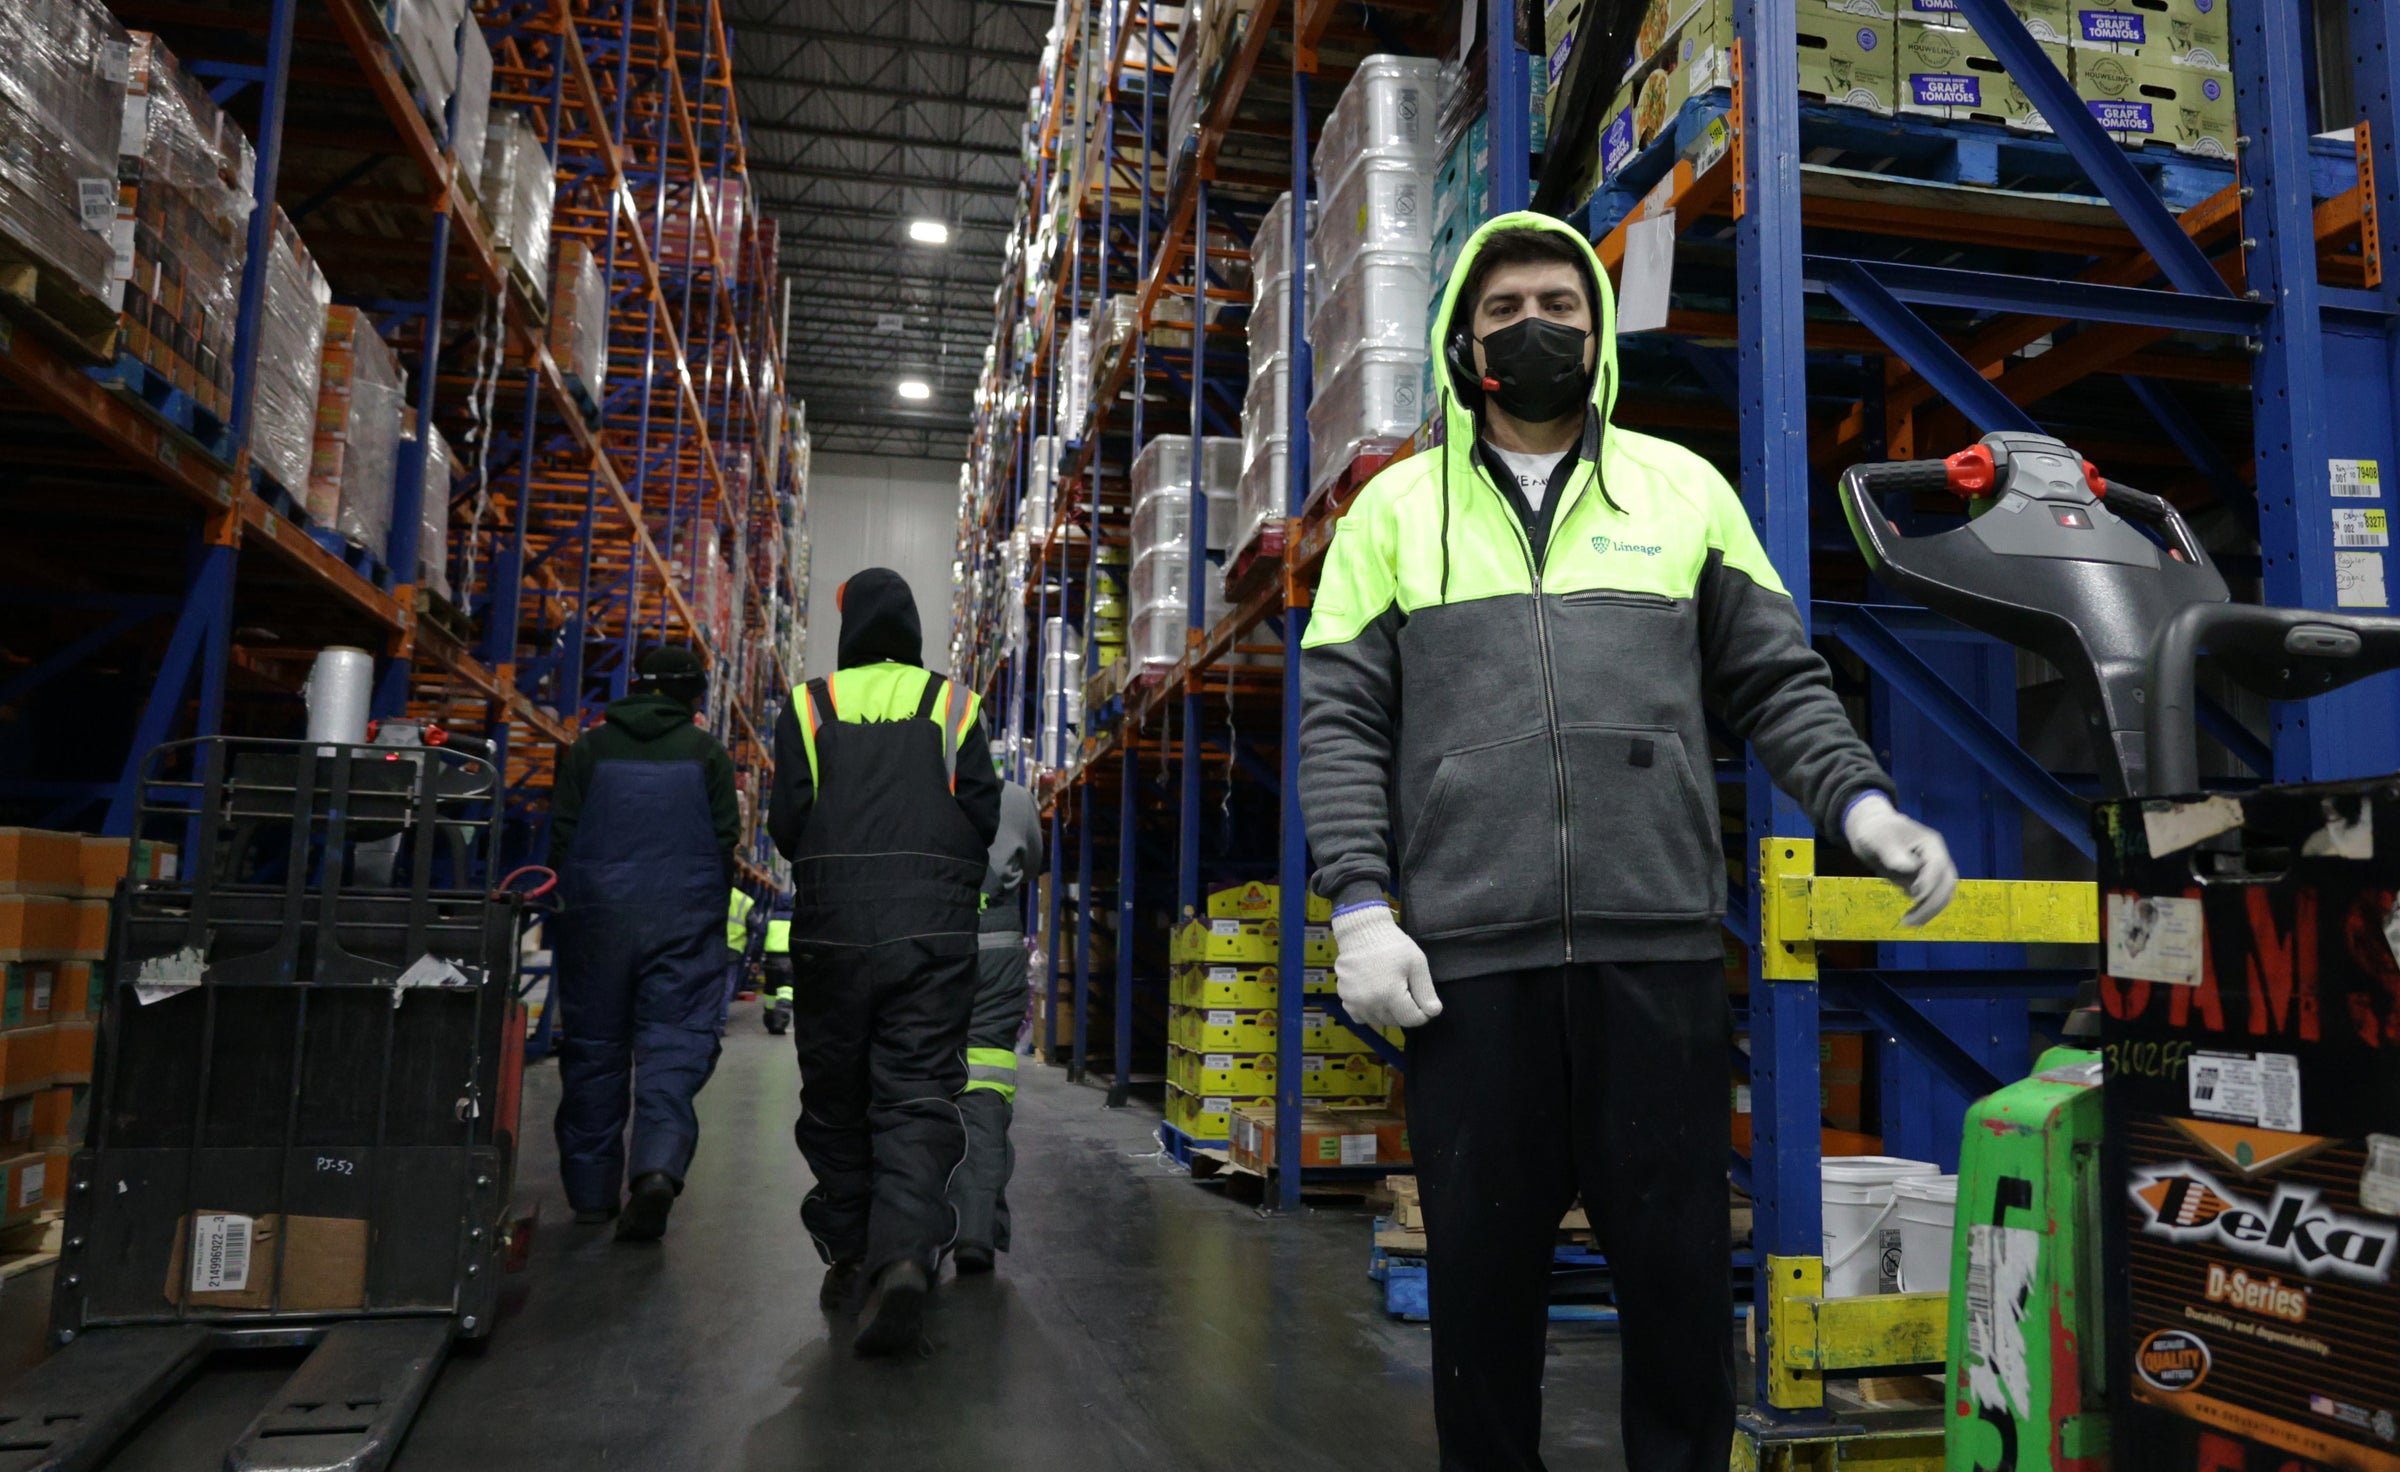 Epik workwear hoodie in lineage warehouse